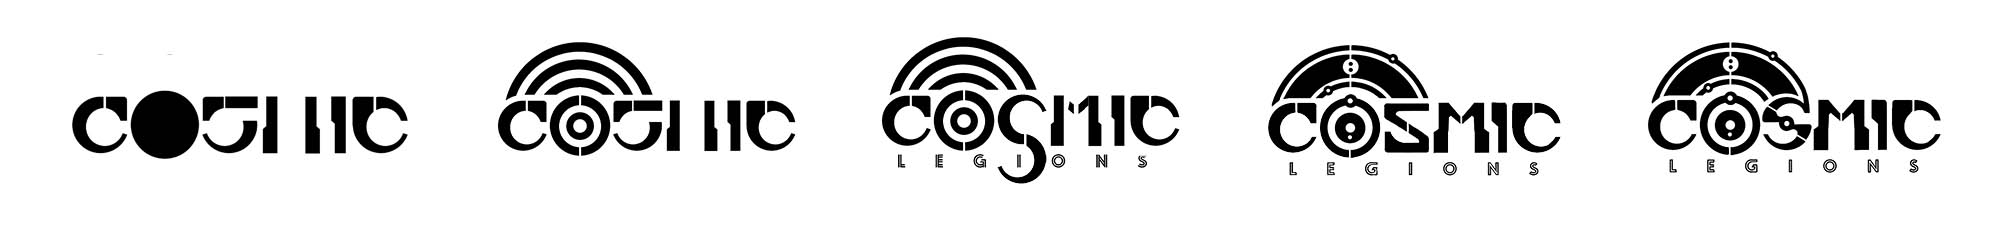 Cosmic Legions logos